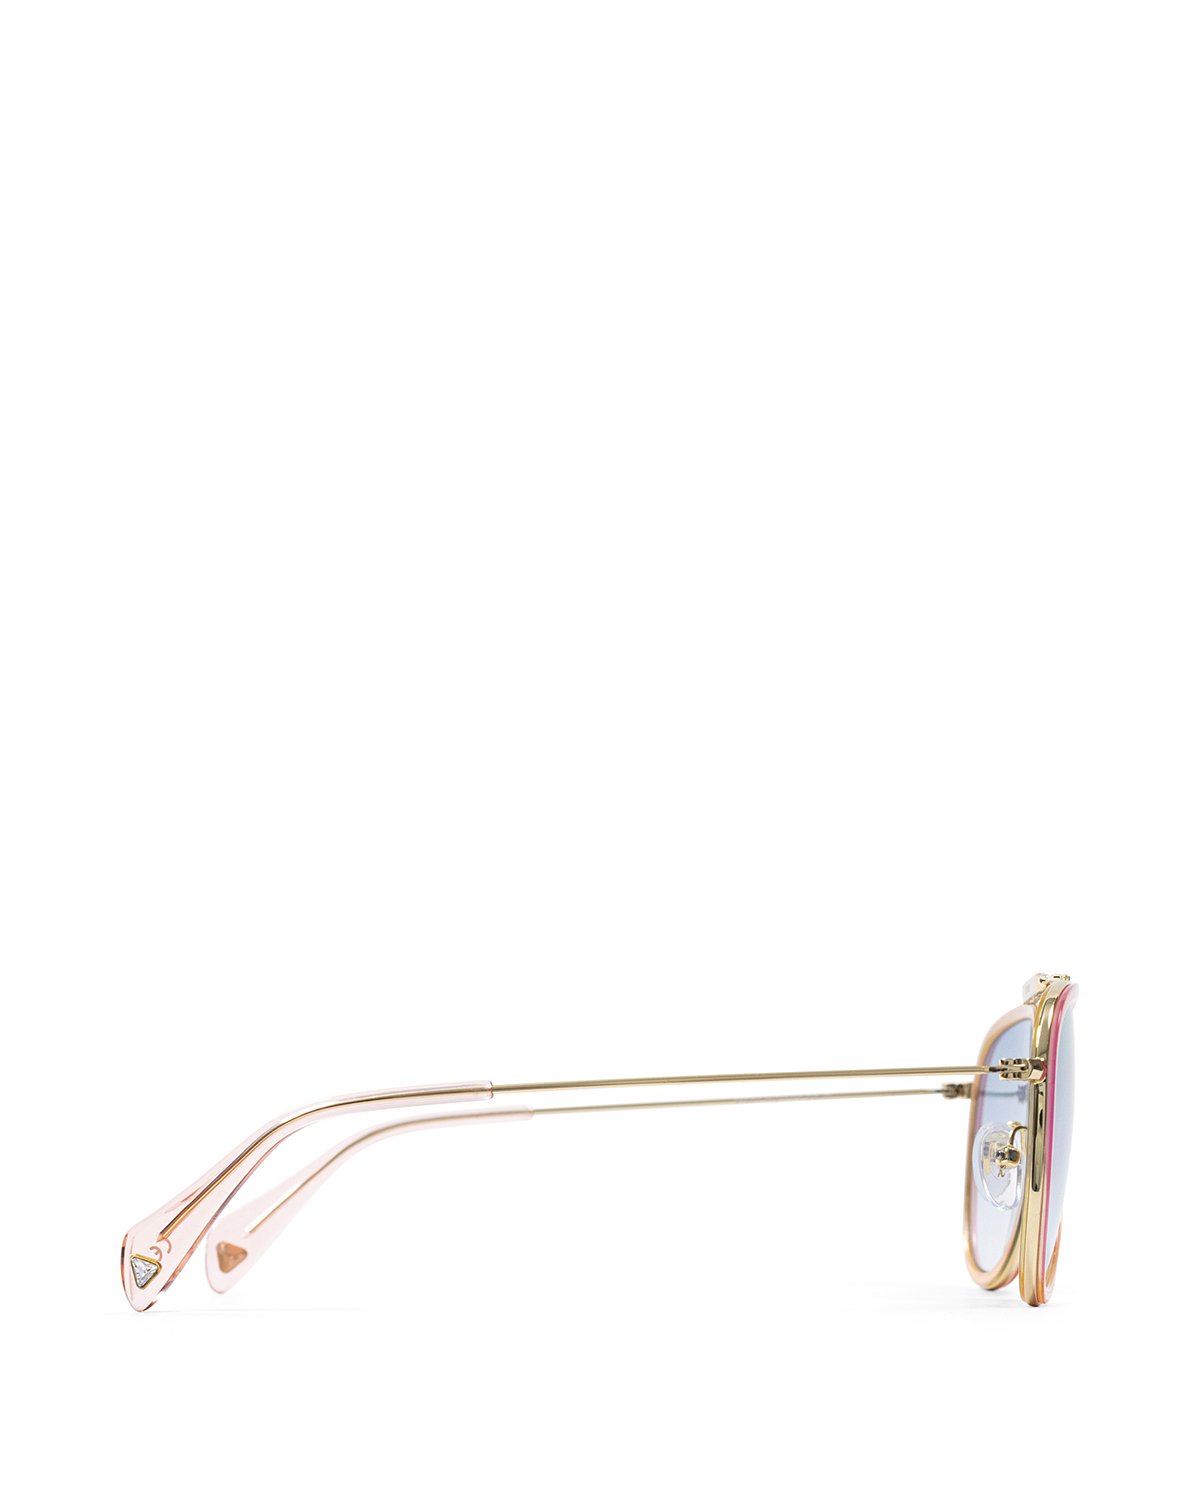 Pink aviator style sunglasses | Accessories, Sunglasses | Genny